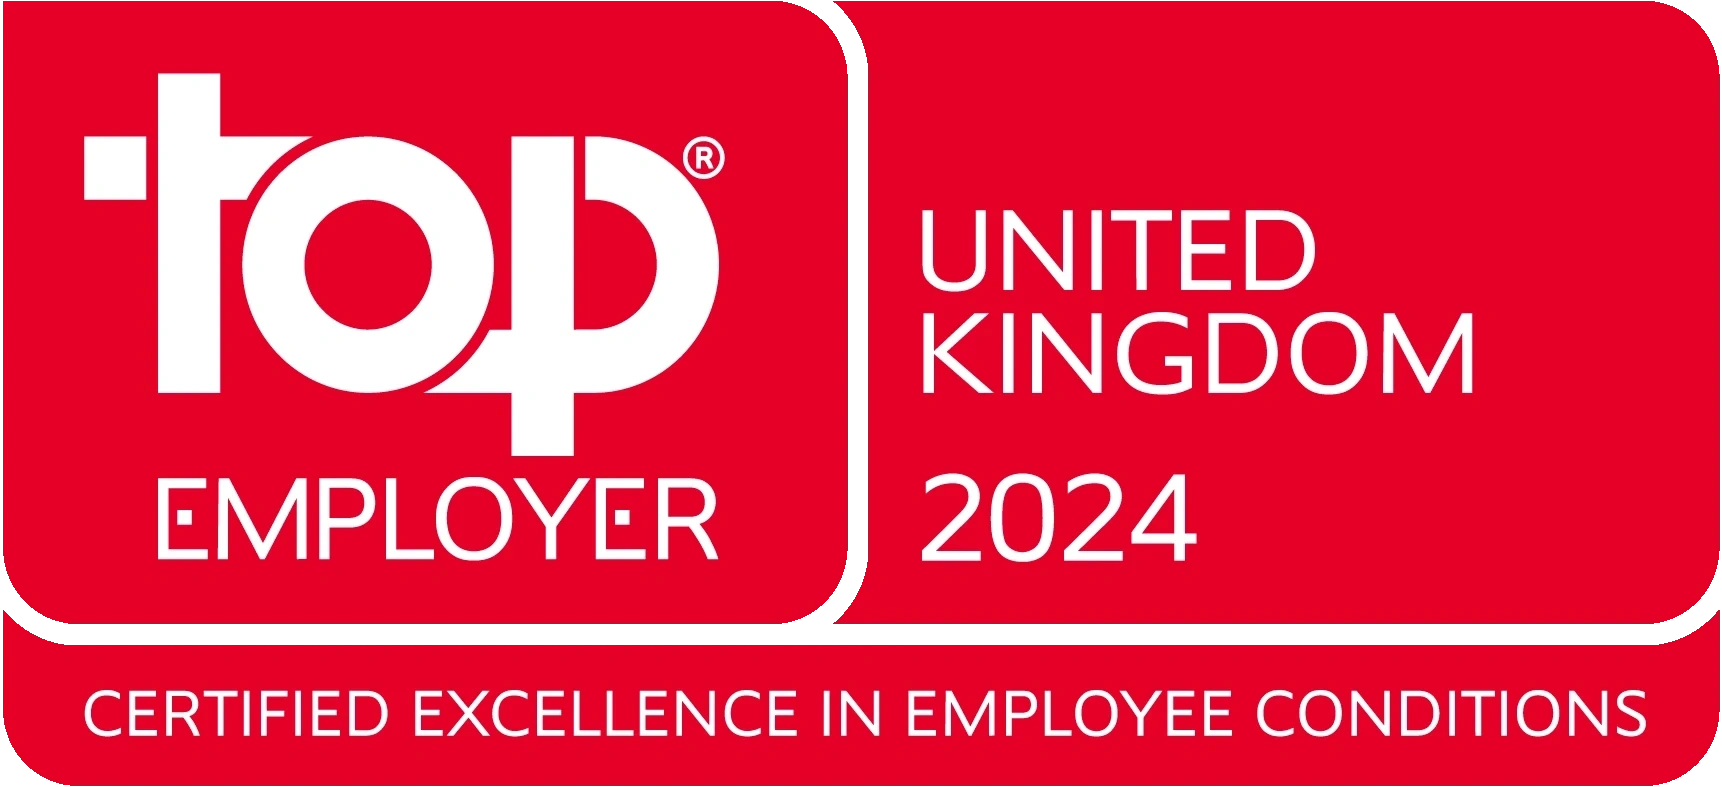 #Top Employer in United Kingdom